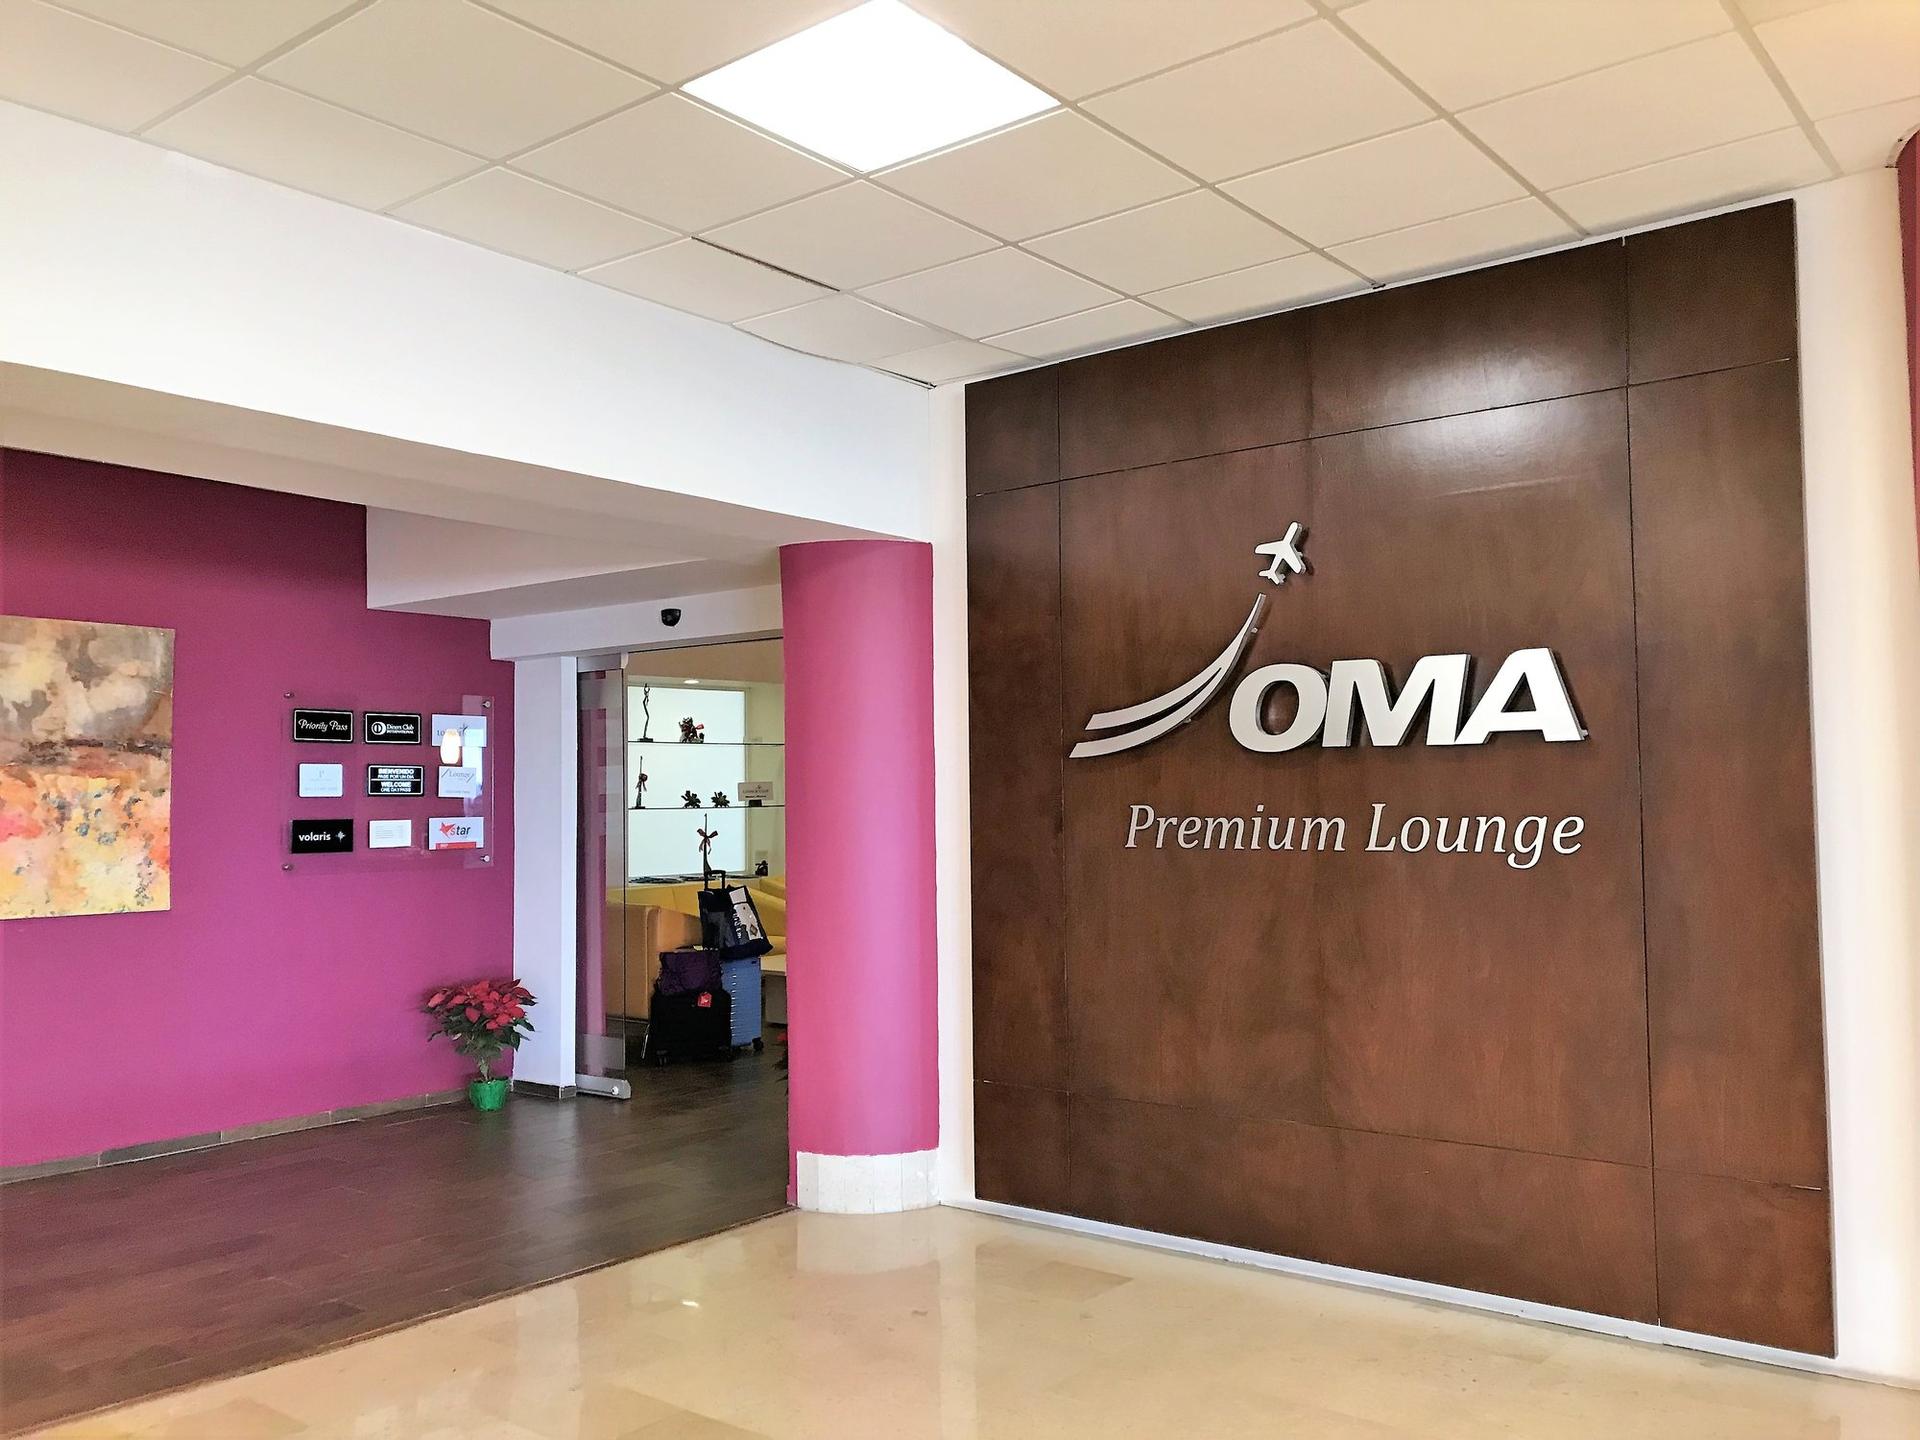 OMA Premium Lounge image 11 of 30